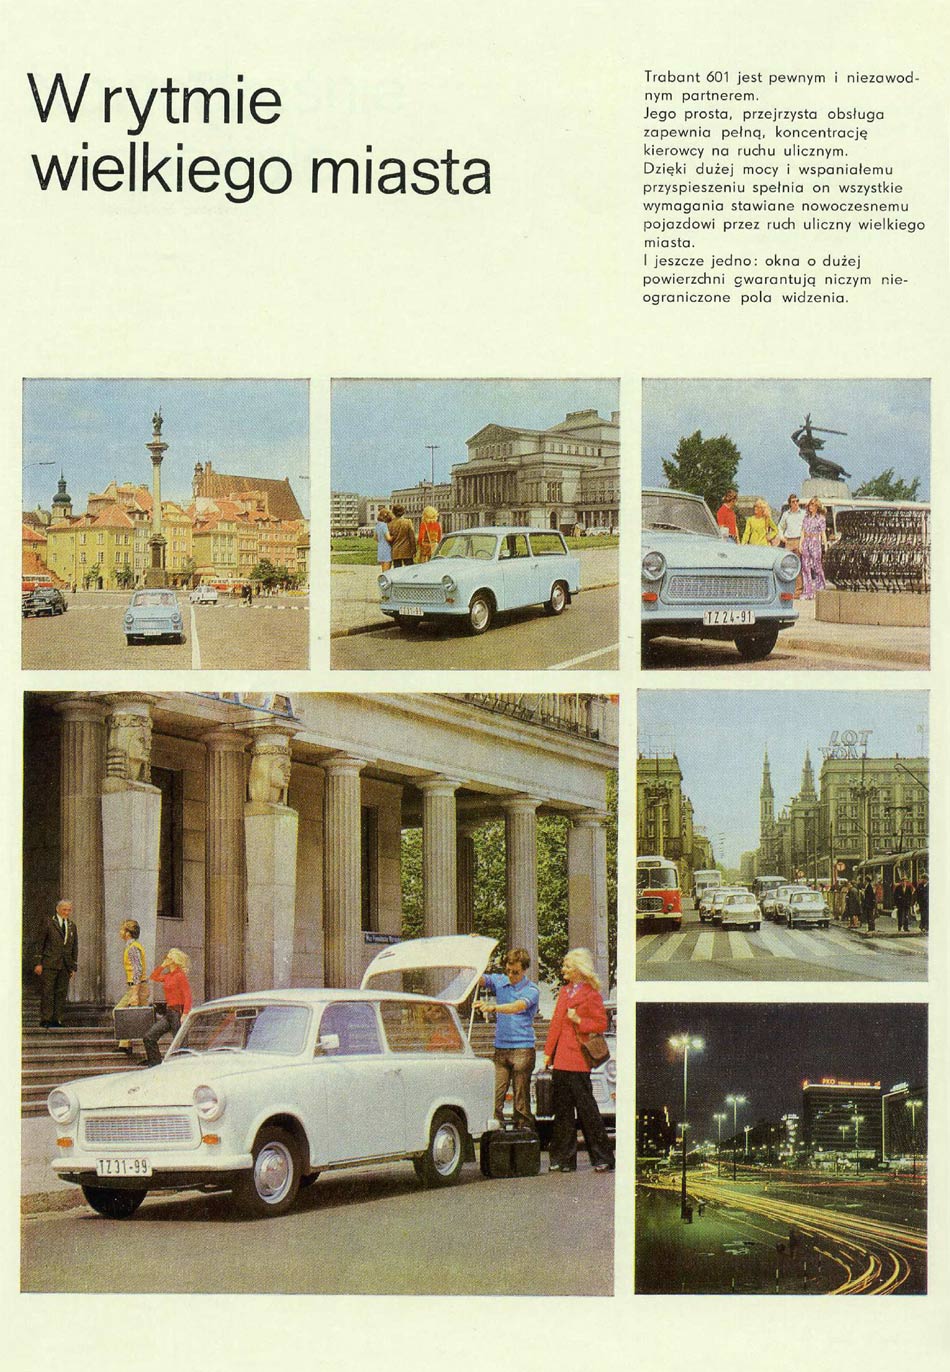 1974 - Trabant 601 - Seite 8